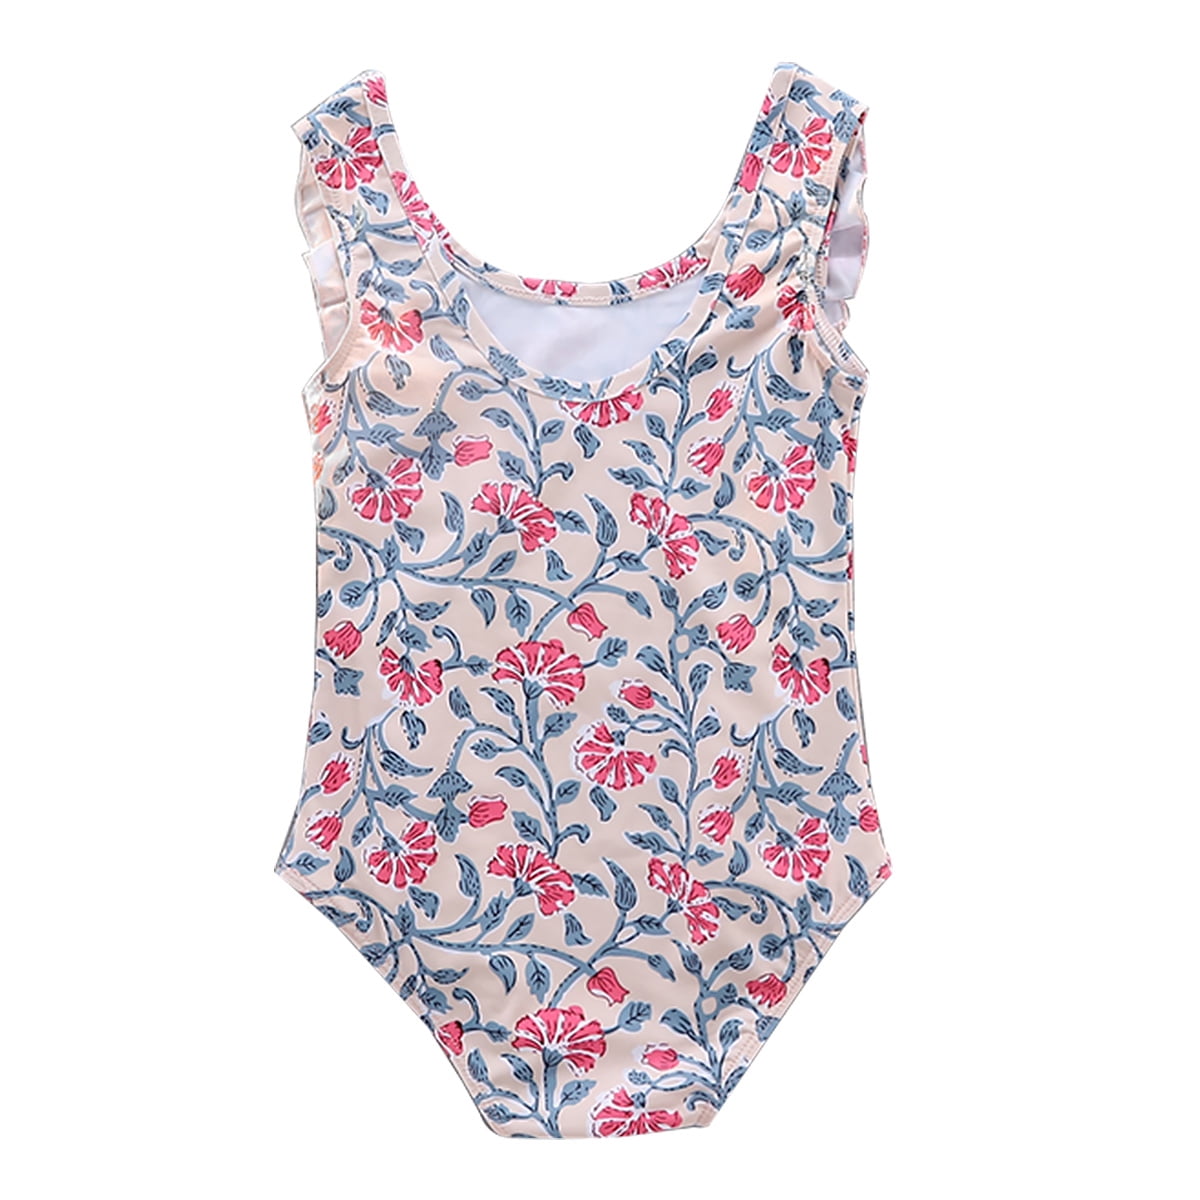 Choomomo Baby Girls Toddler Swimsuits Floral Printed Long Sleeve Zipper Rash Guard UPF 50 Sun Protection